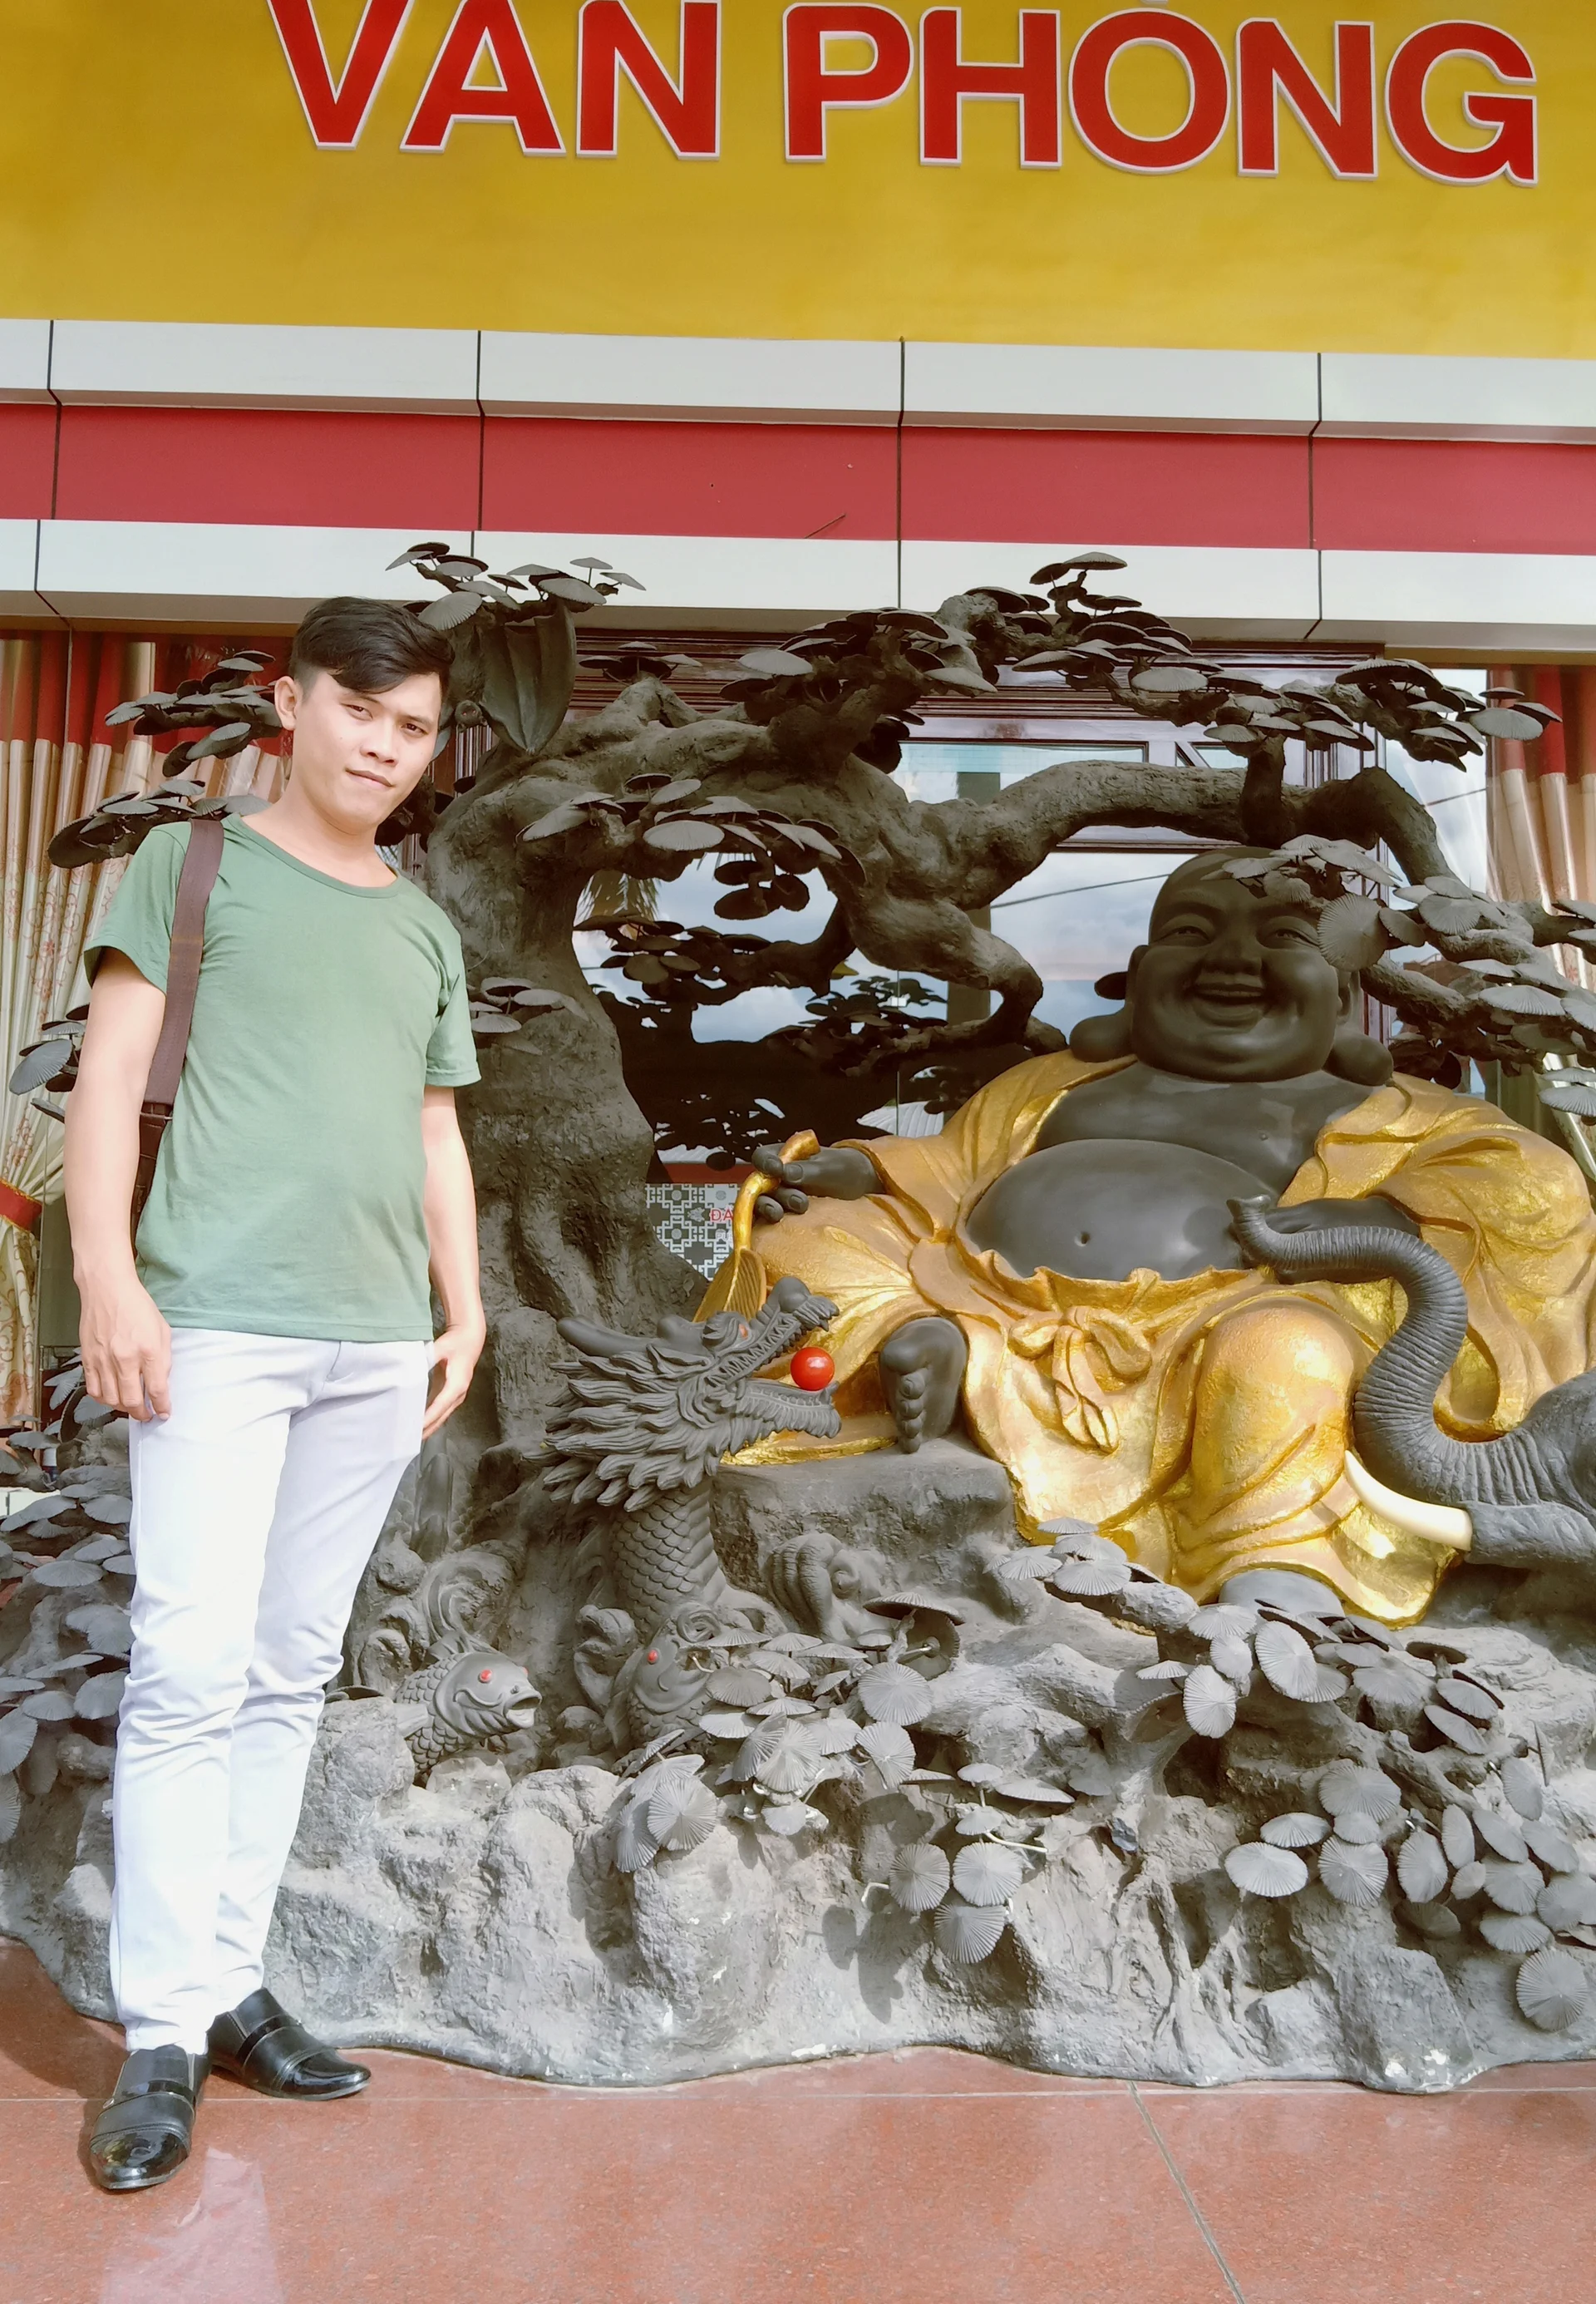 Trần Toàn's cover photo